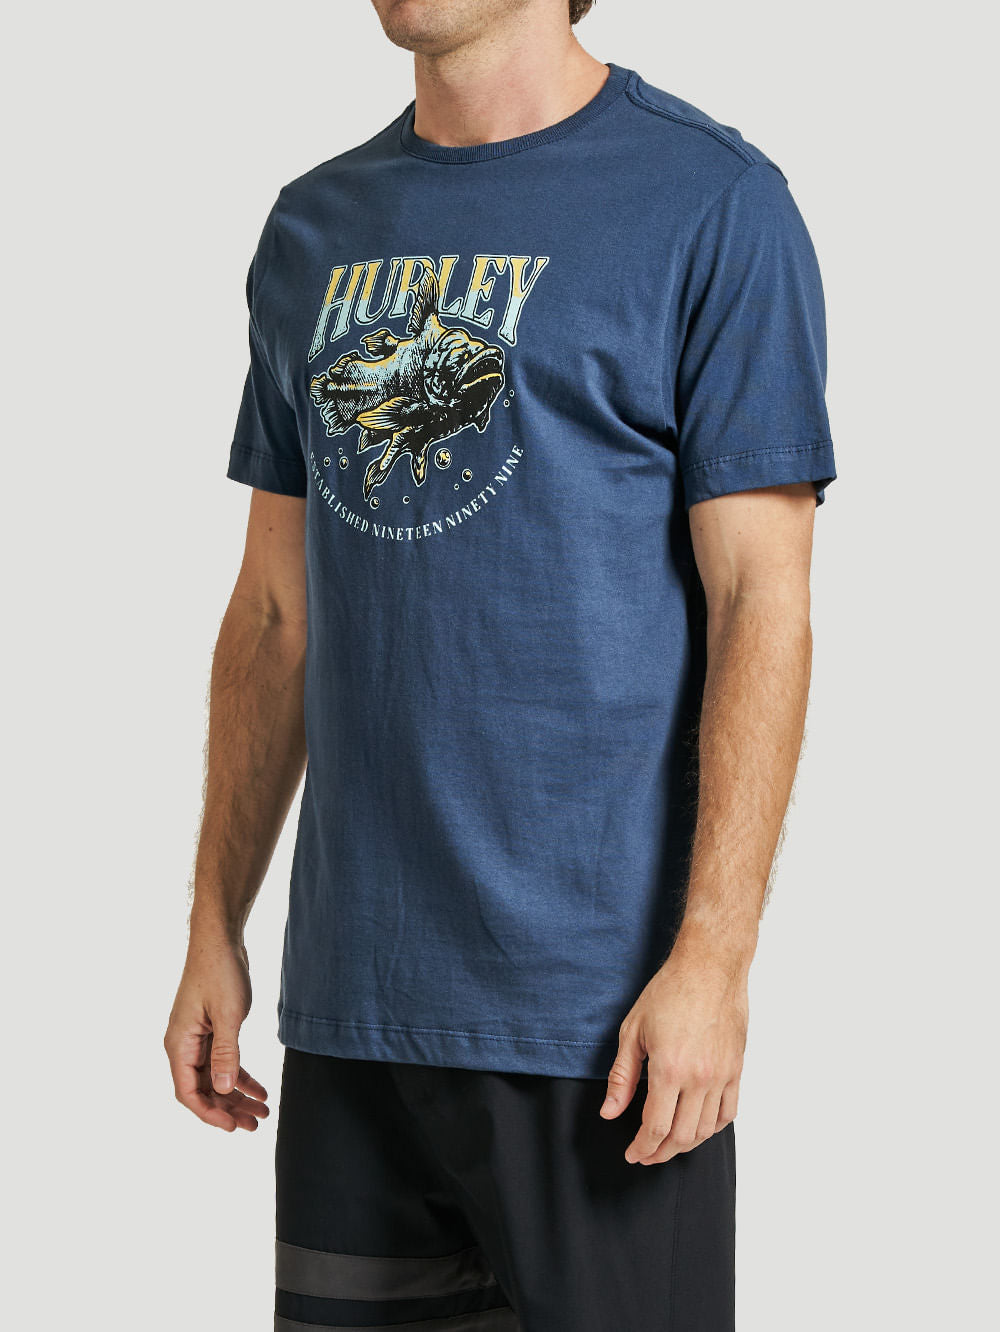 Camiseta Hurley Celant Marinho